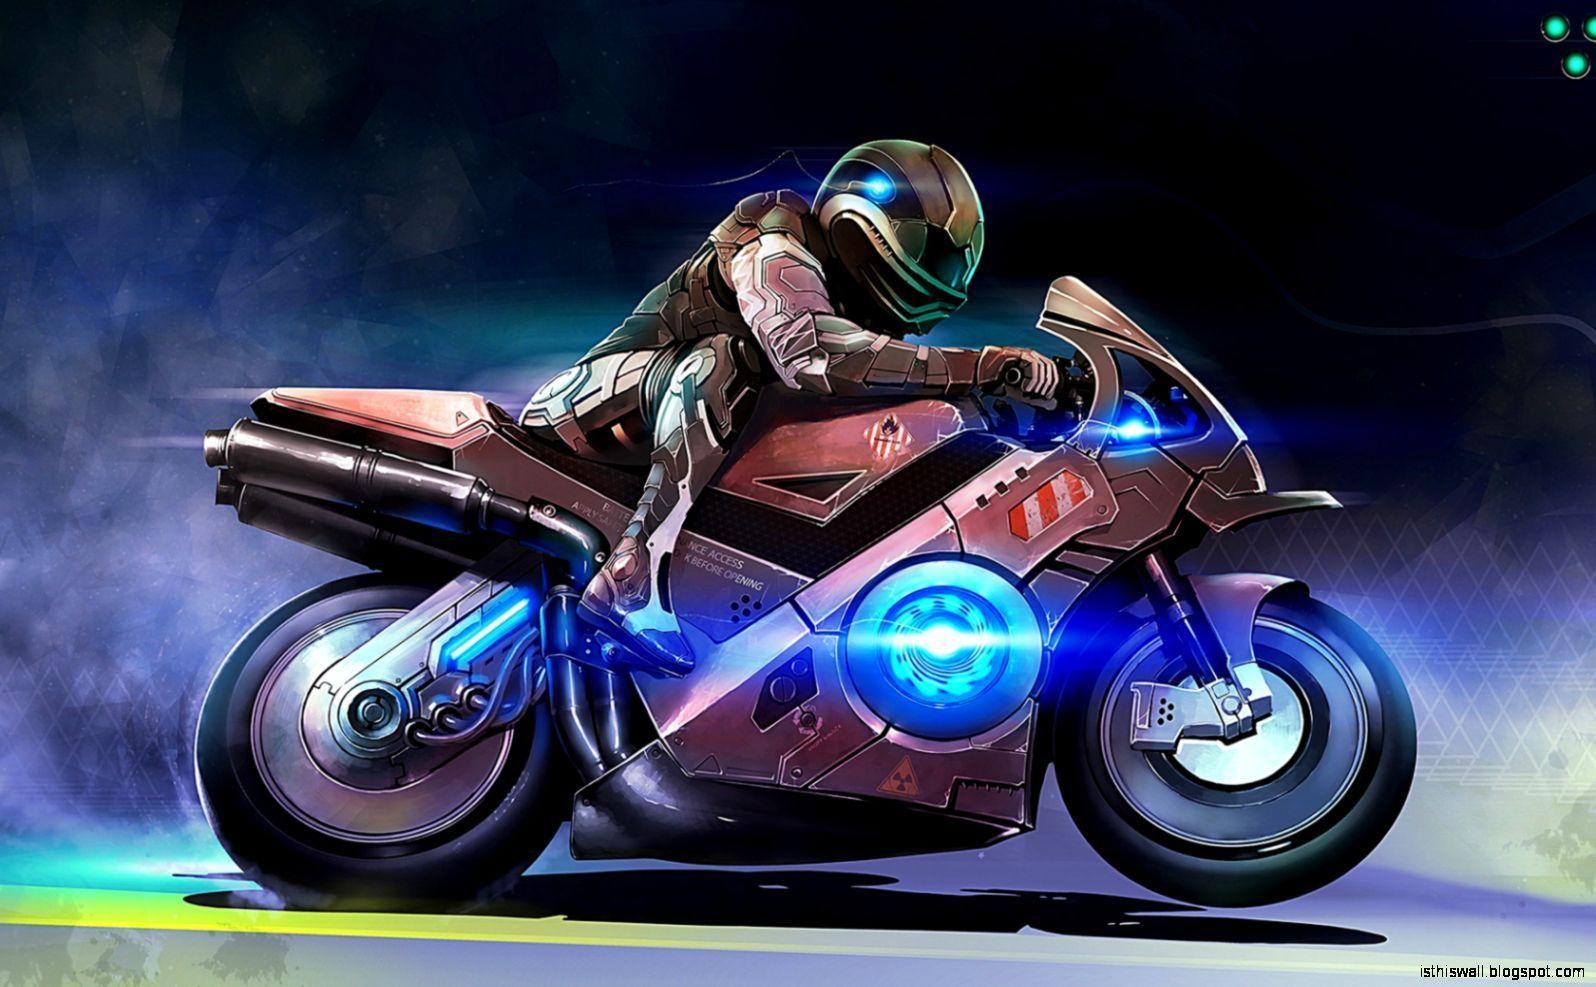 Cool Motorcycle Art background HD amp Widescreen Desktop Wallpaper